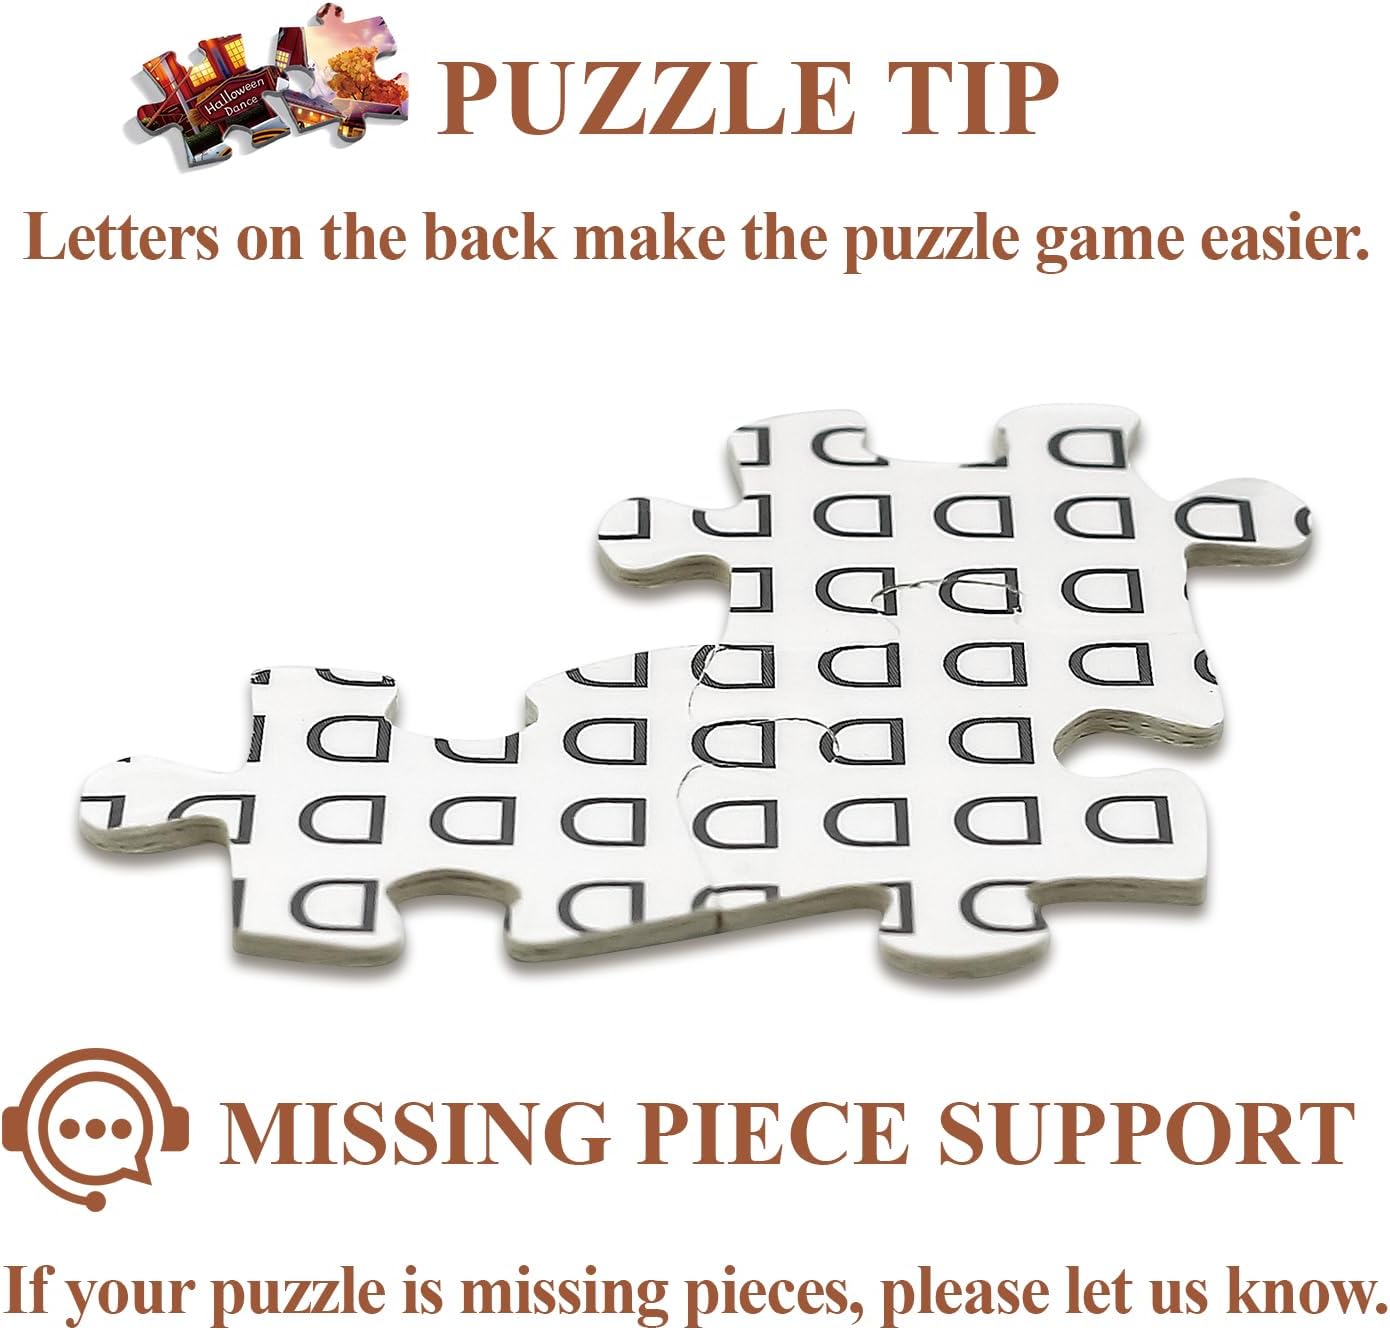 Halloween Revelry Jigsaw Puzzle 1000 Pieces